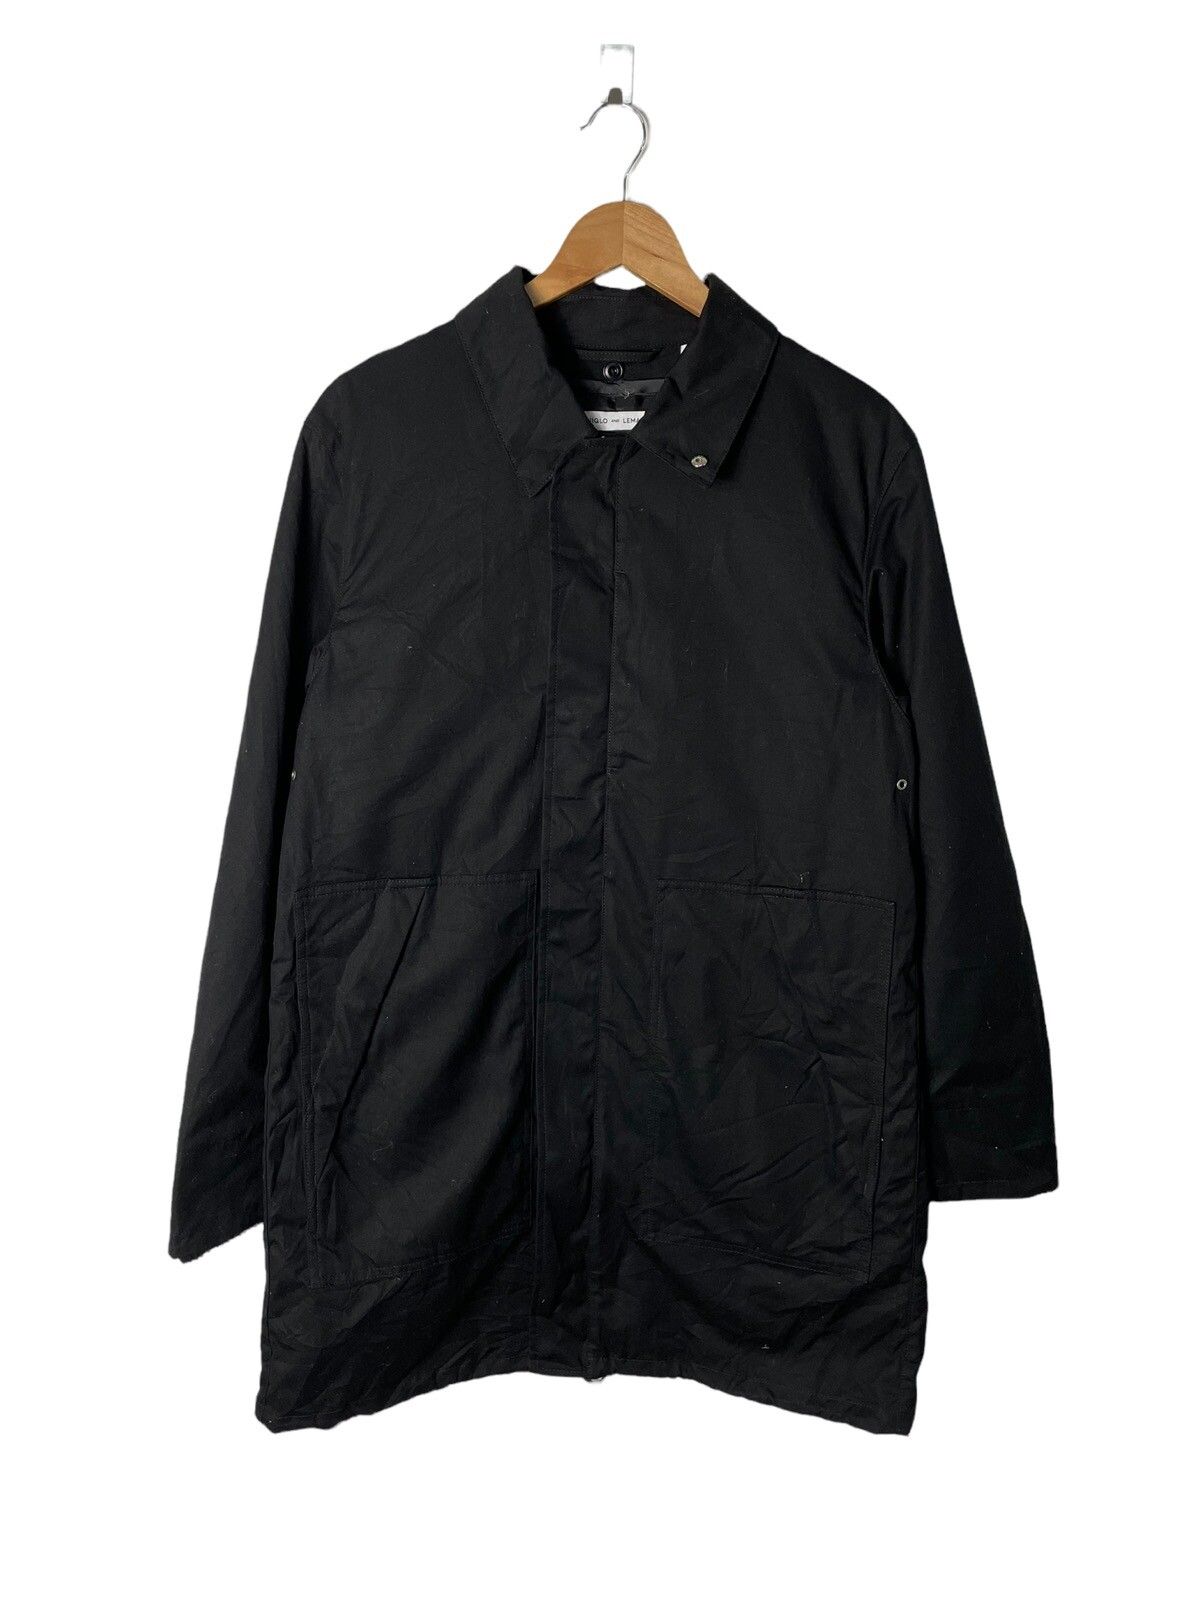 Uniqlo Lemaire for Uniqlo Black Fishtail Parka Jacket | Grailed